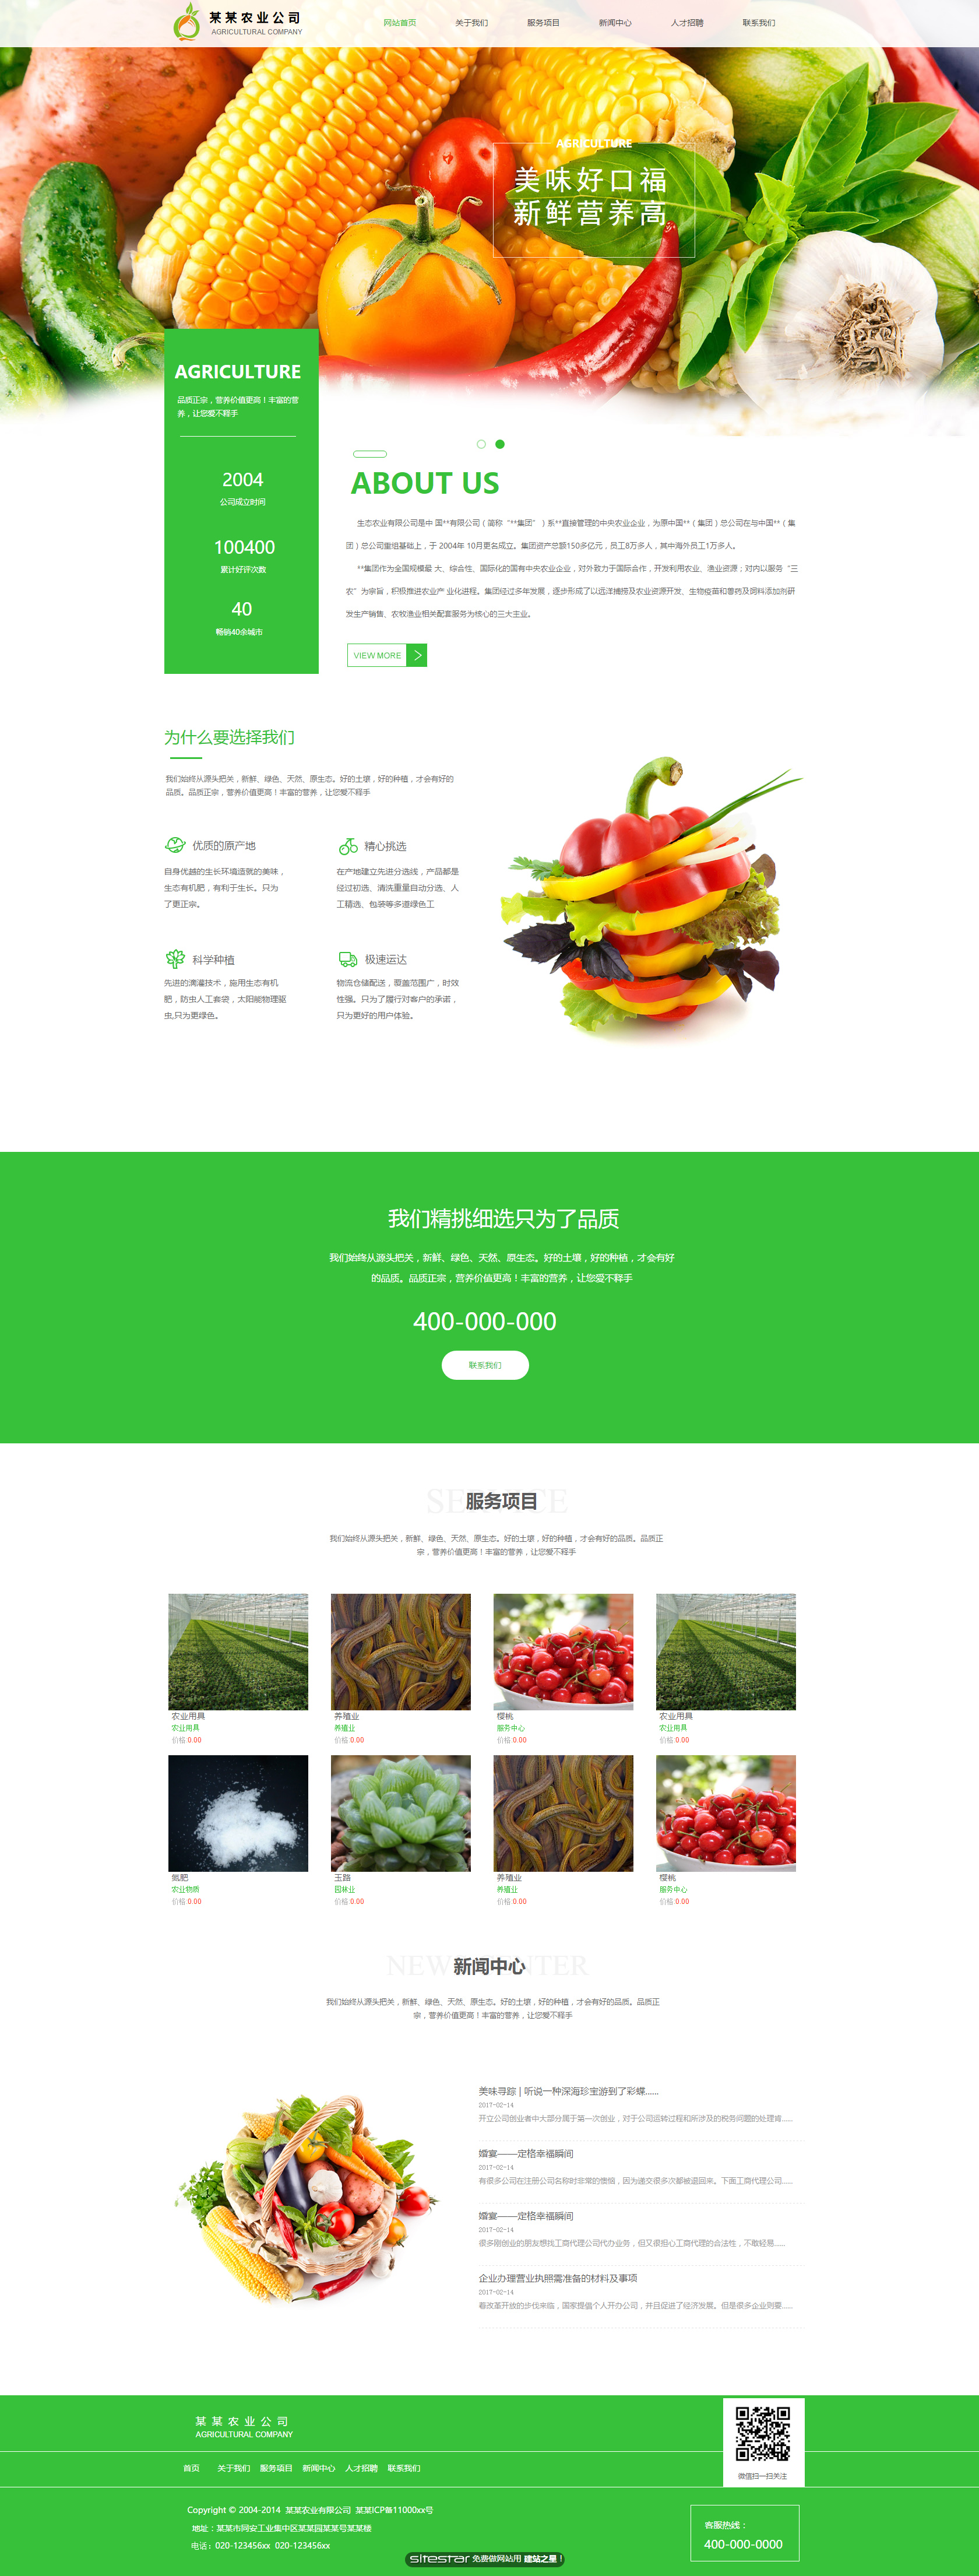 企业网站精美模板-agricultural-230